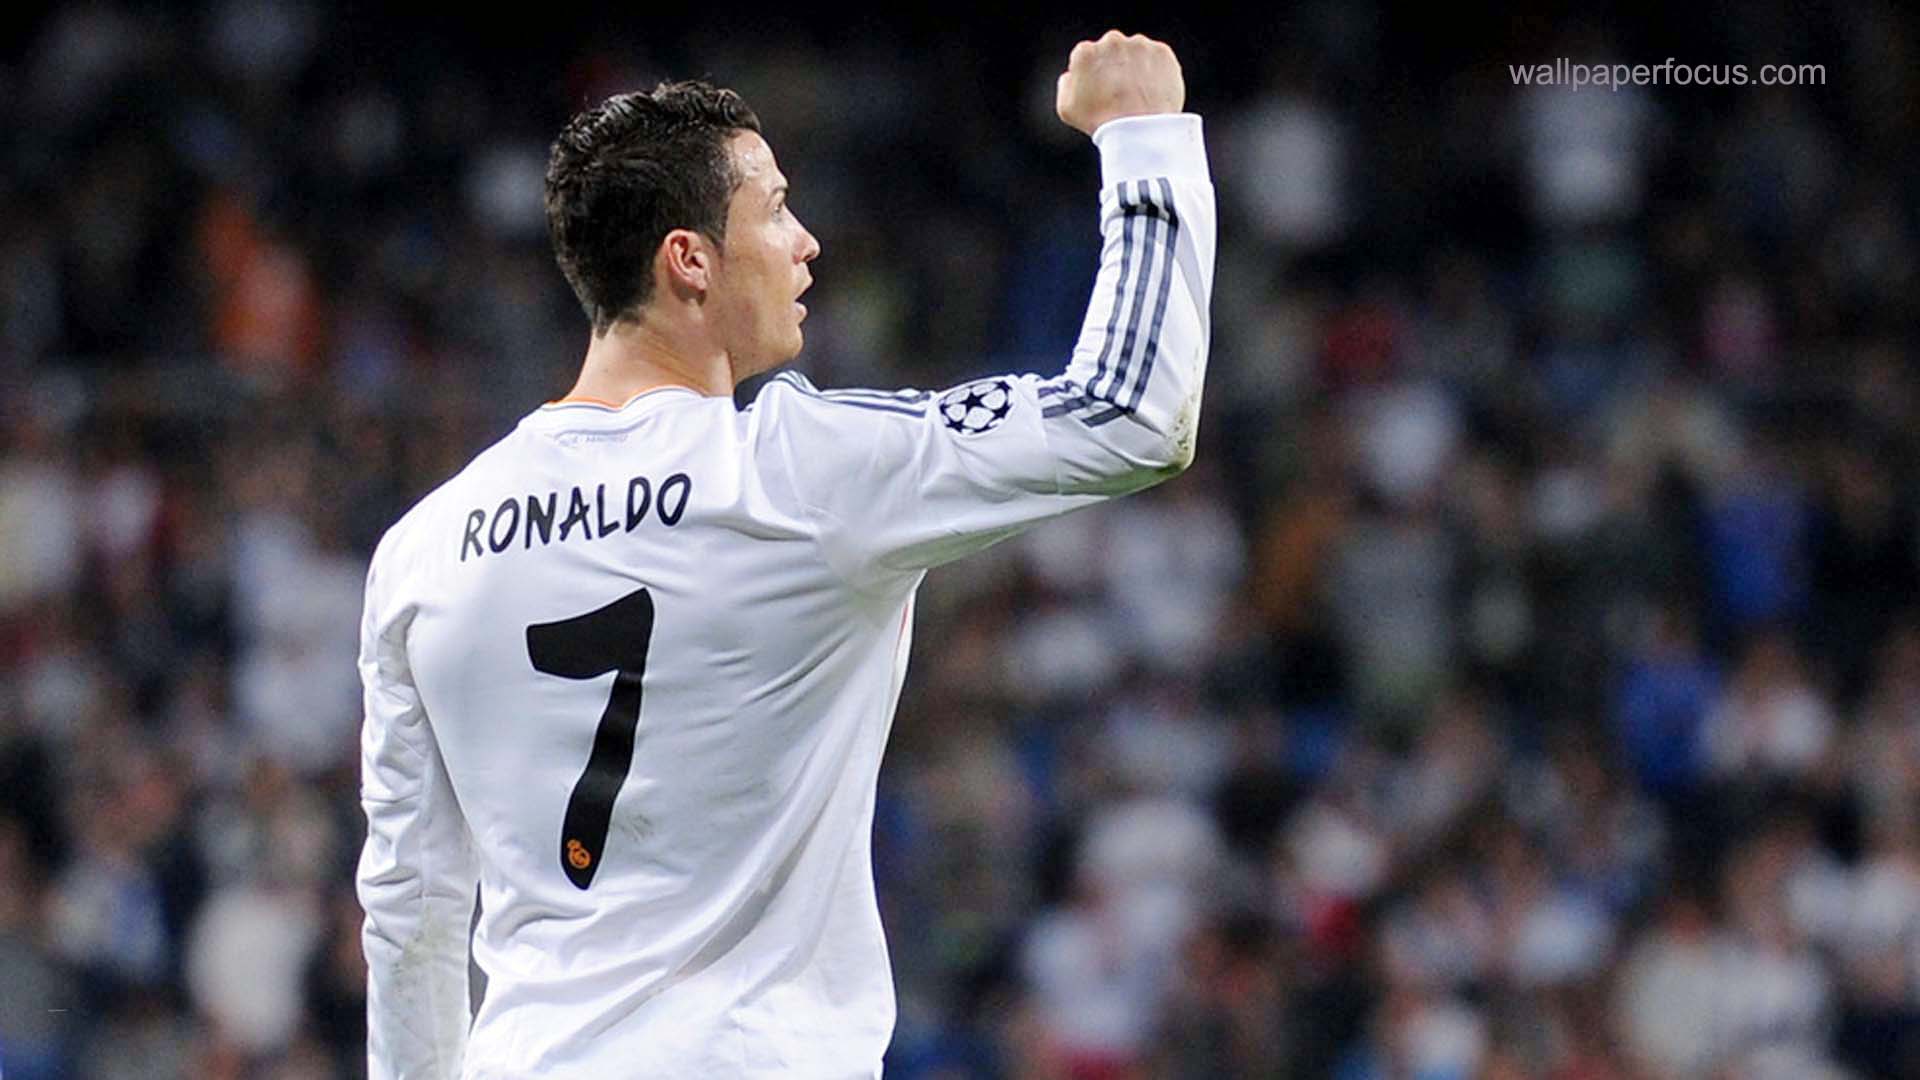 Cristiano Ronaldo Power 25 Wallpaper: Players, Teams, Leagues